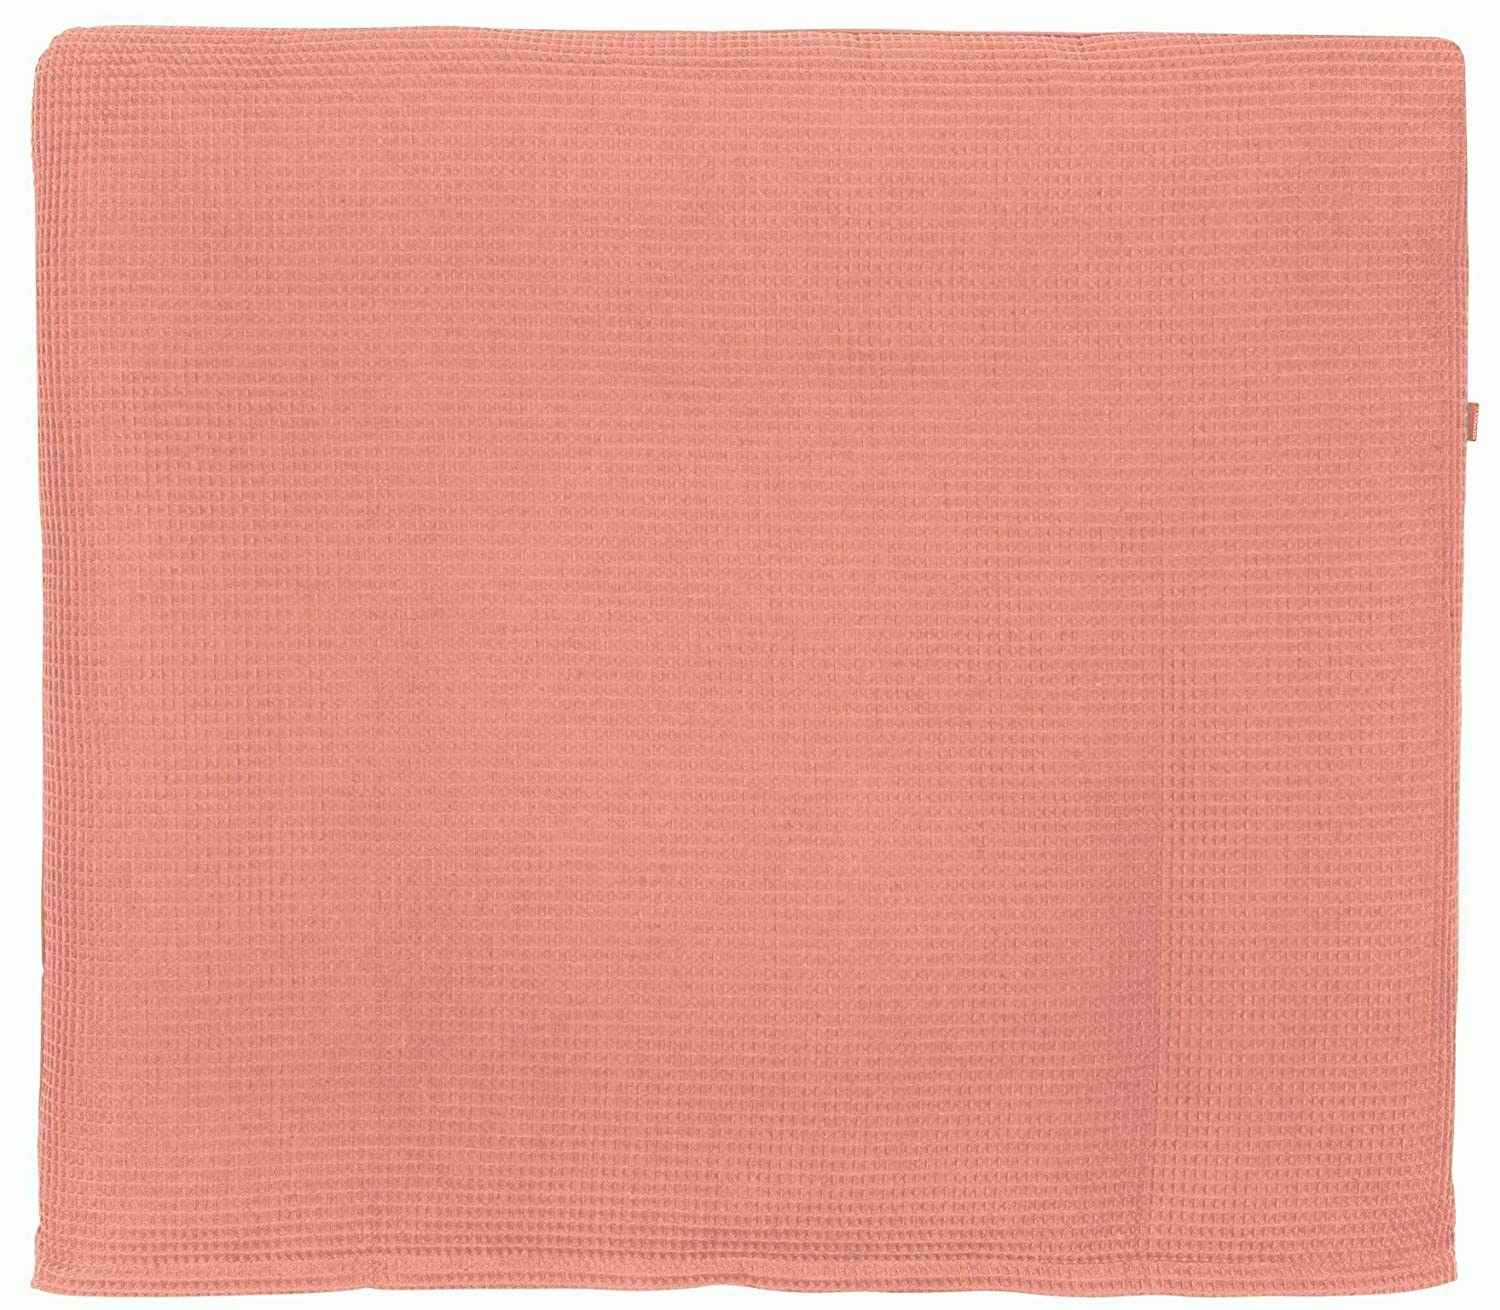 Ideenreich Ideenreich 2475 Changing Mat Cover Salmon Pink